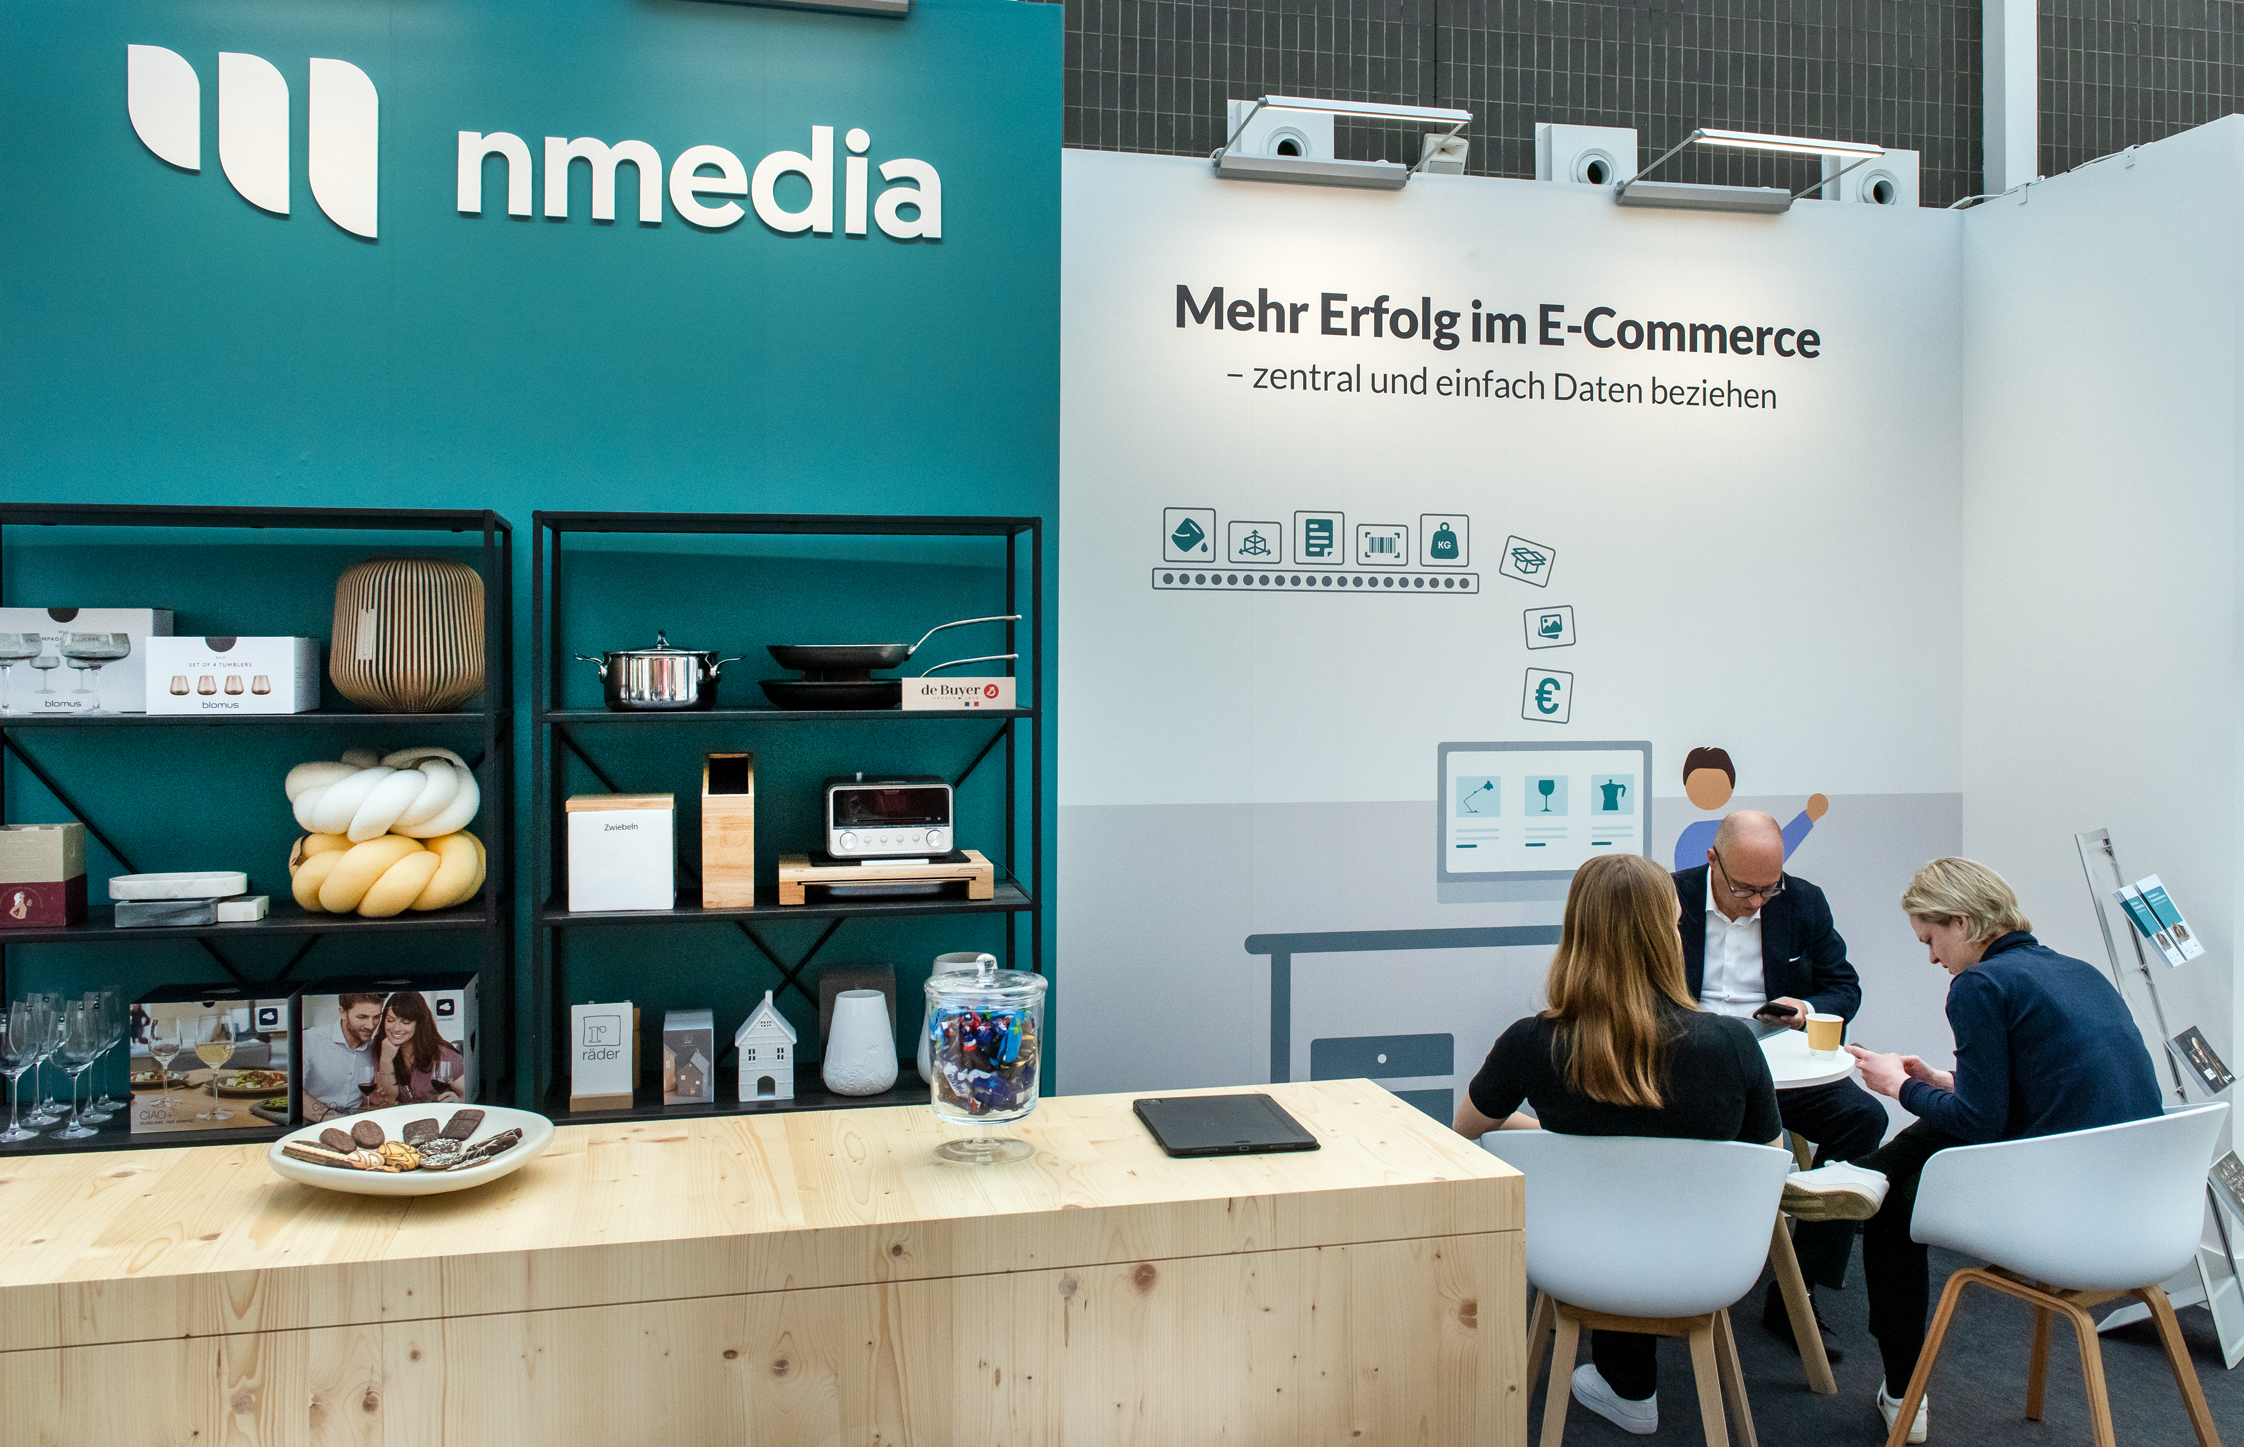 nmedia at the consumer goods fairs trio in Frankfurt am Main. Photo: Messe Frankfurt/Petra Welzel